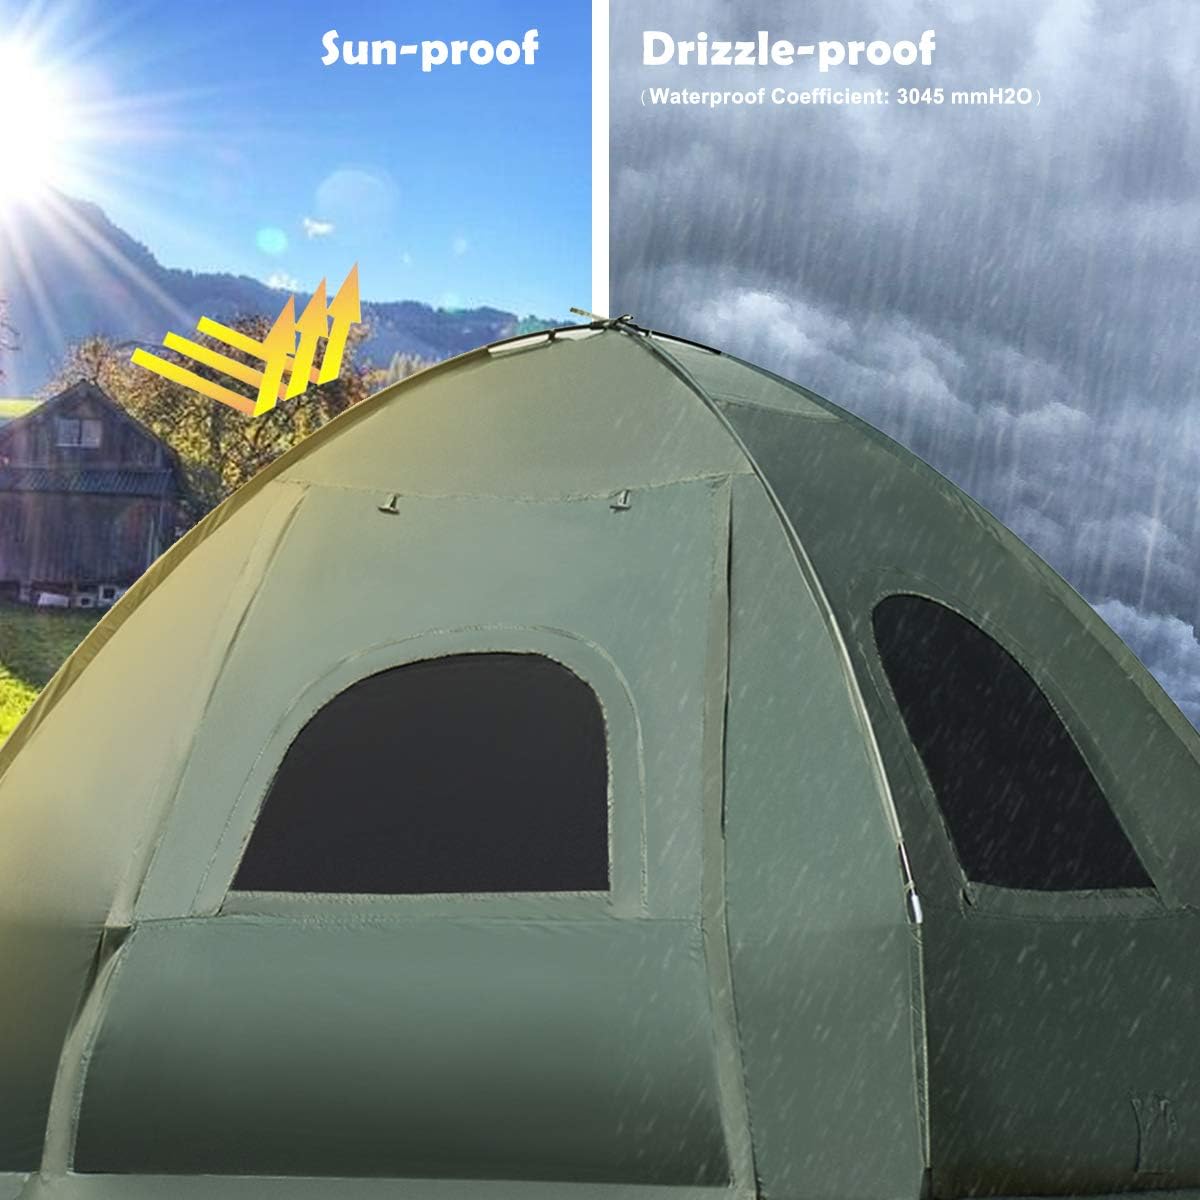 Gymax Camping Cot Waterproof UV Proof